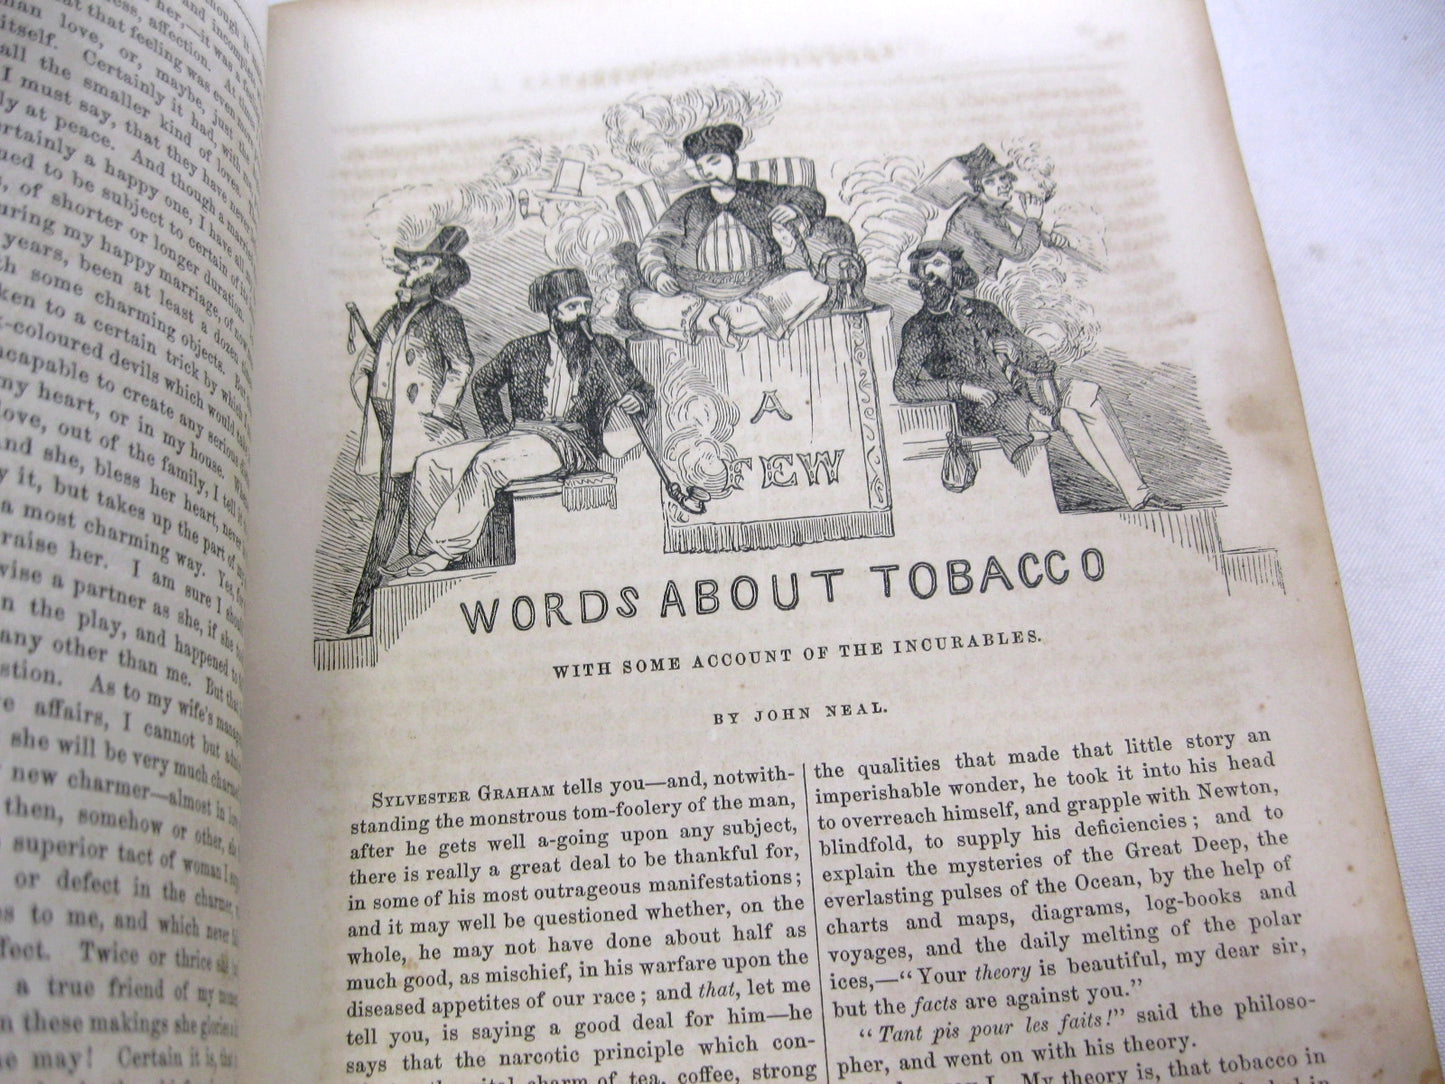 Sartain's Union Magazine for 1851